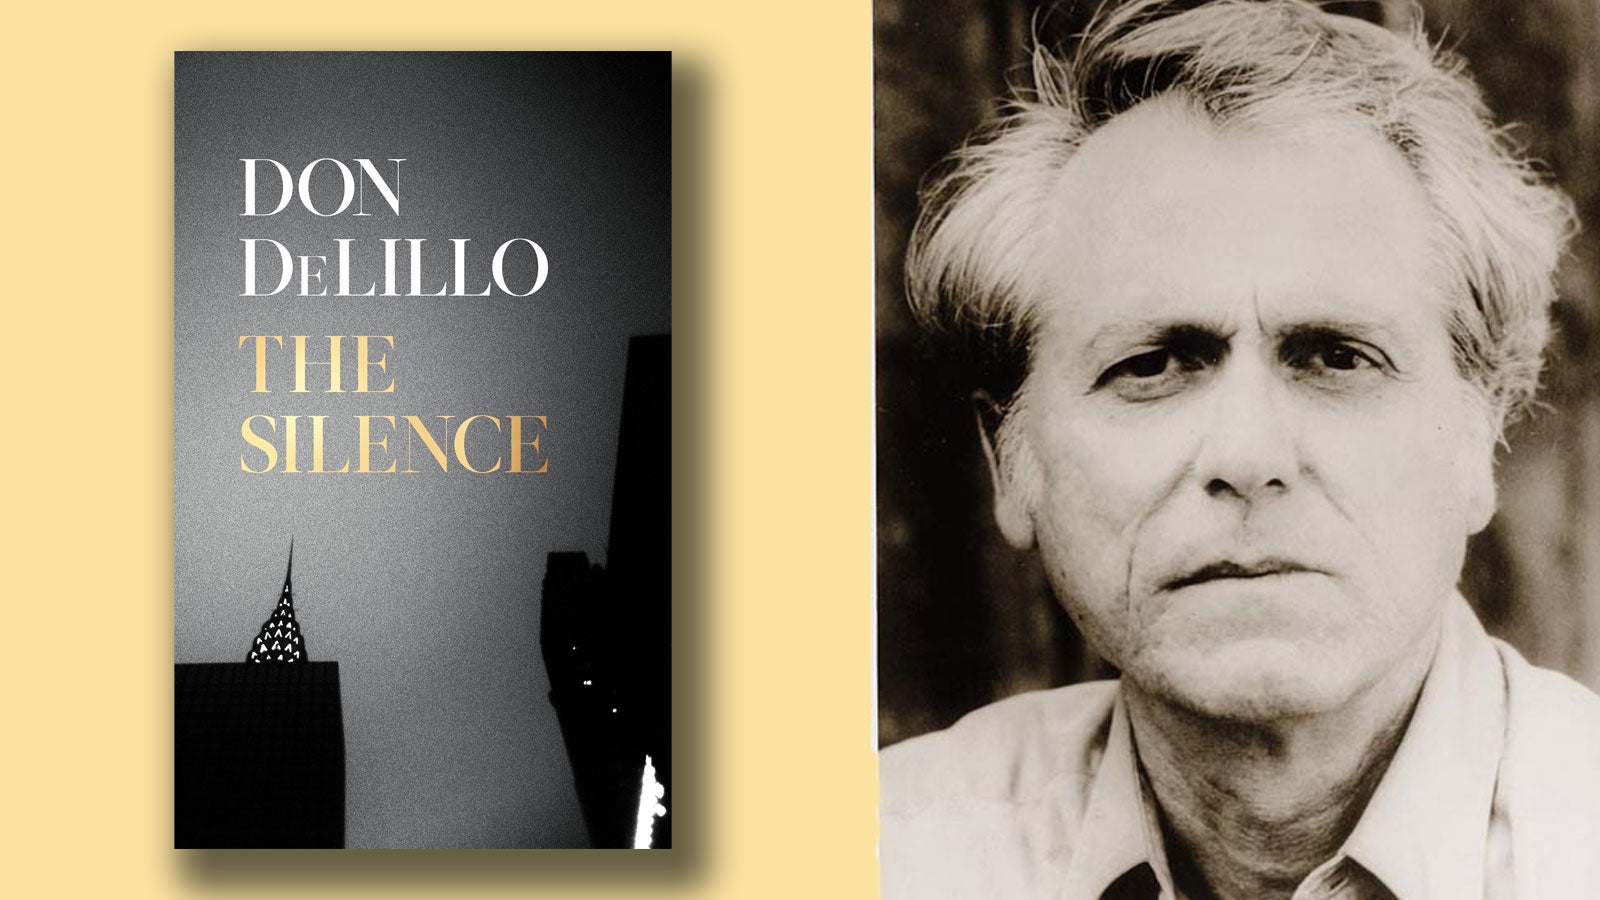 The Silence book cover and Don DeLillo